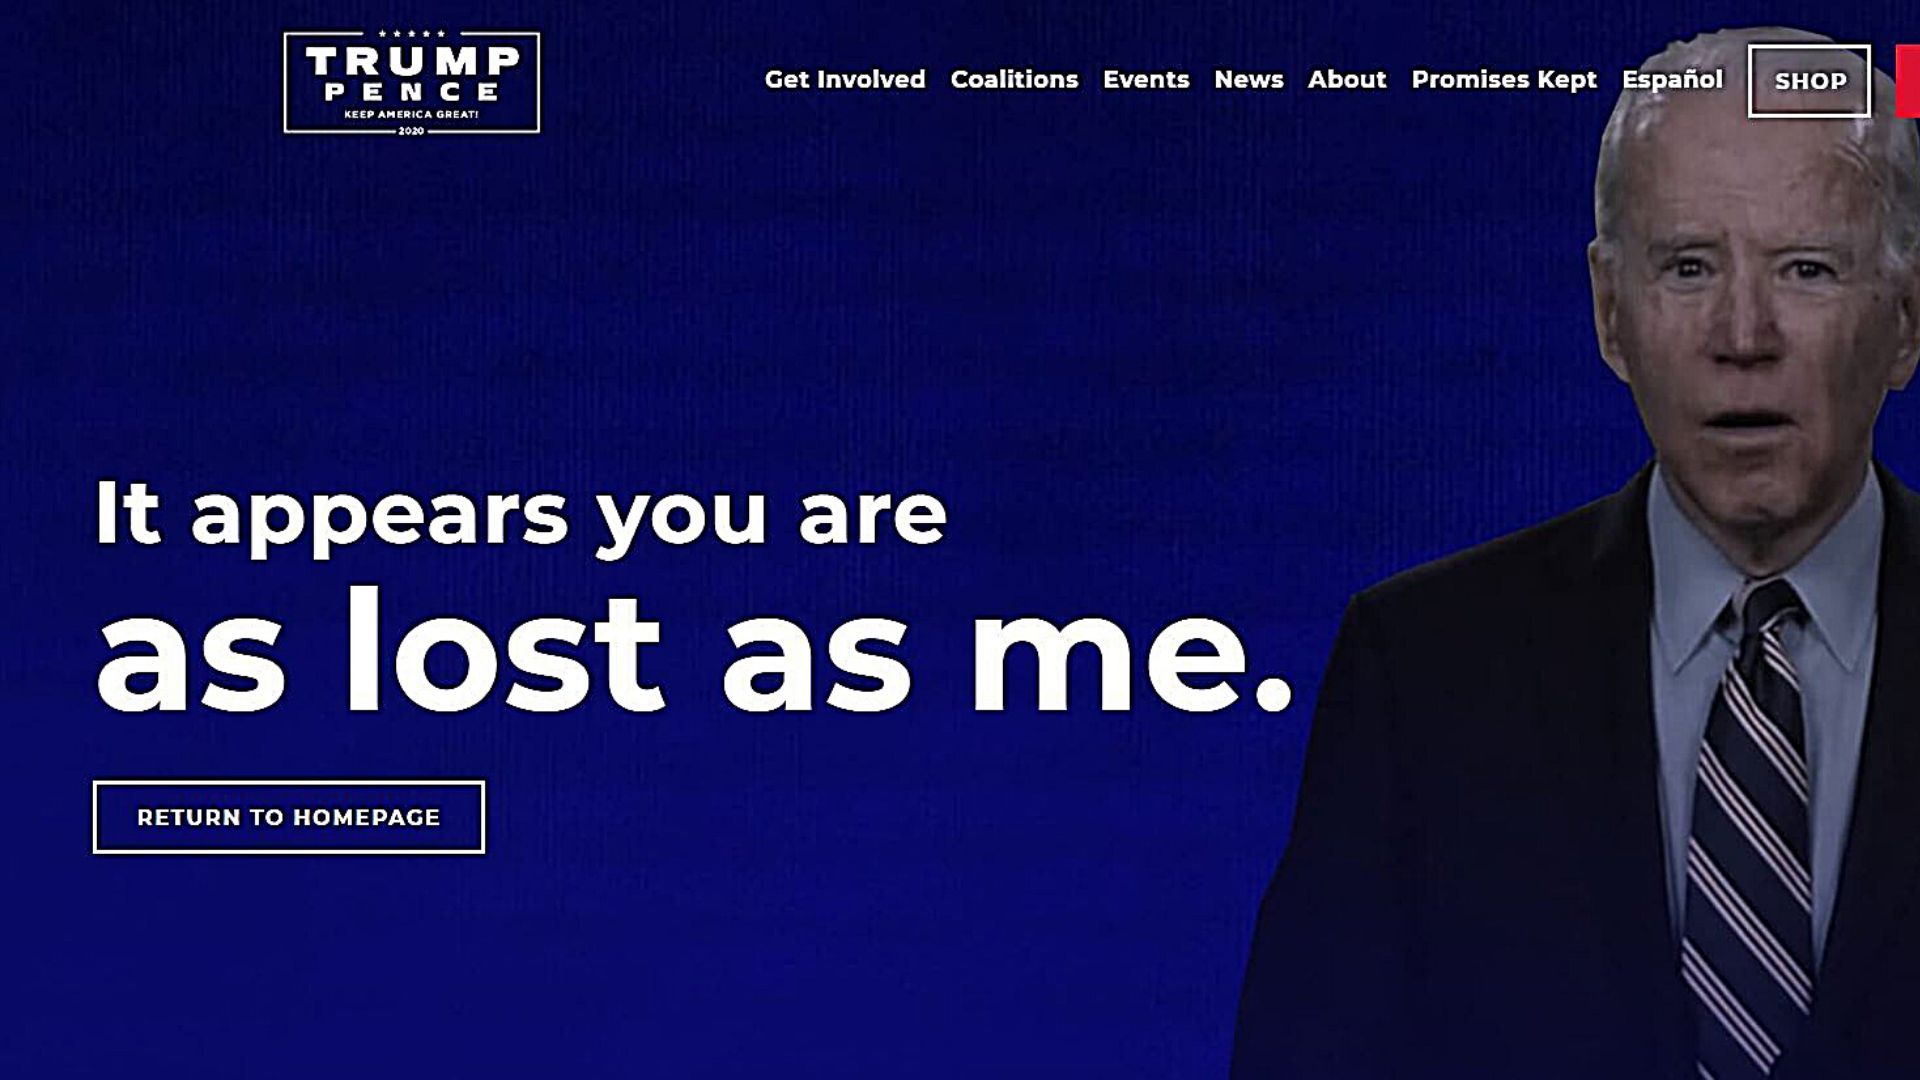 President Trump's error page mocks Joe Biden